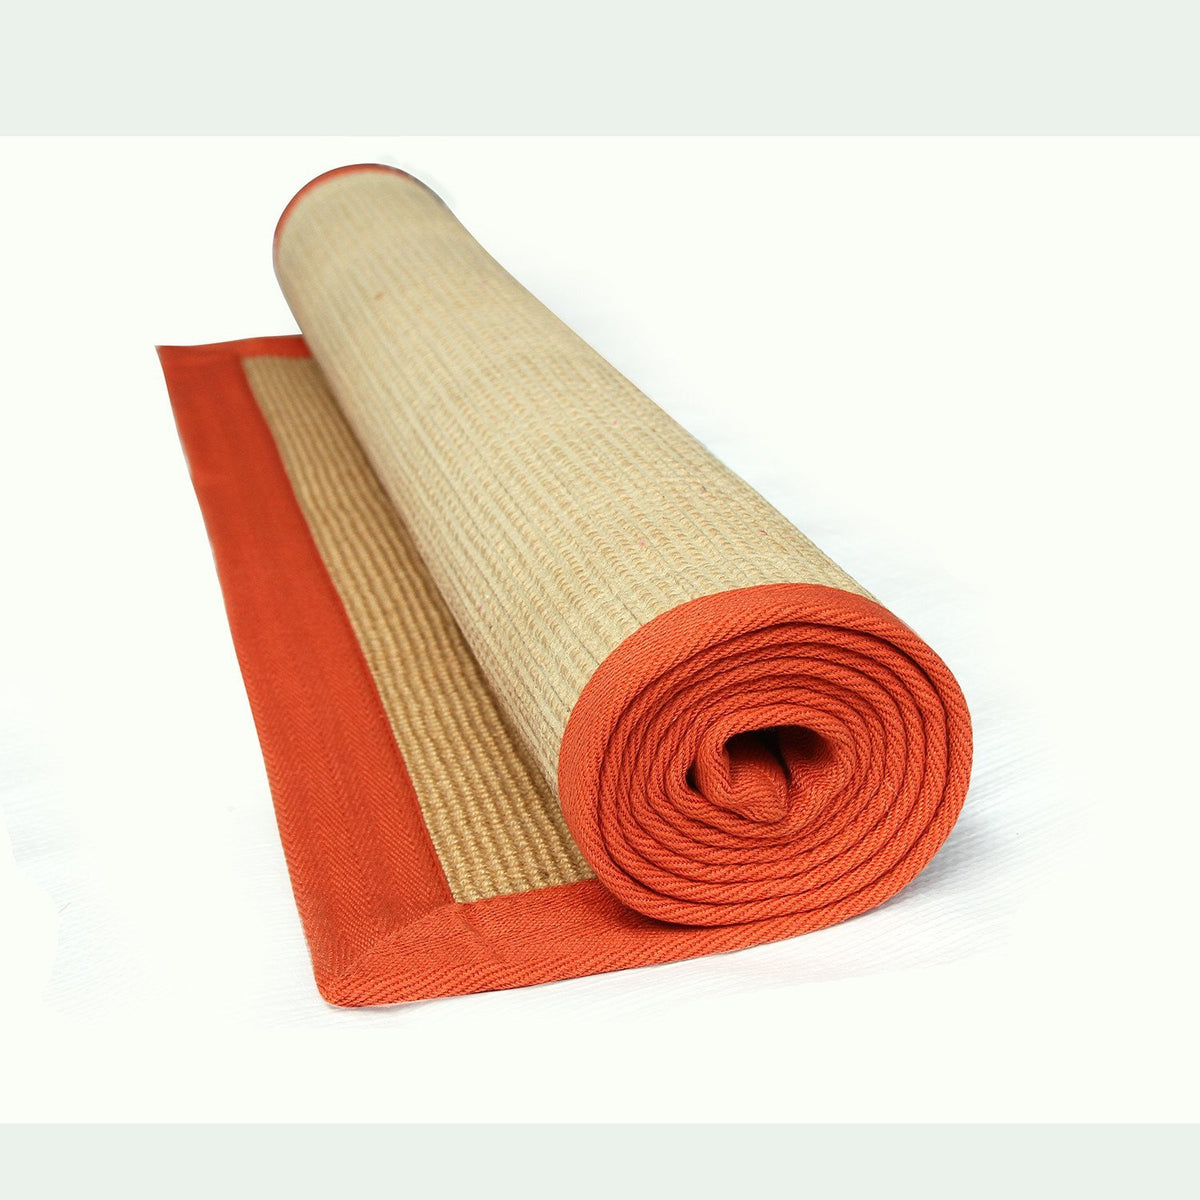 OnlyMat Latex backed Jute Yoga Mat With Orange Cotton Border